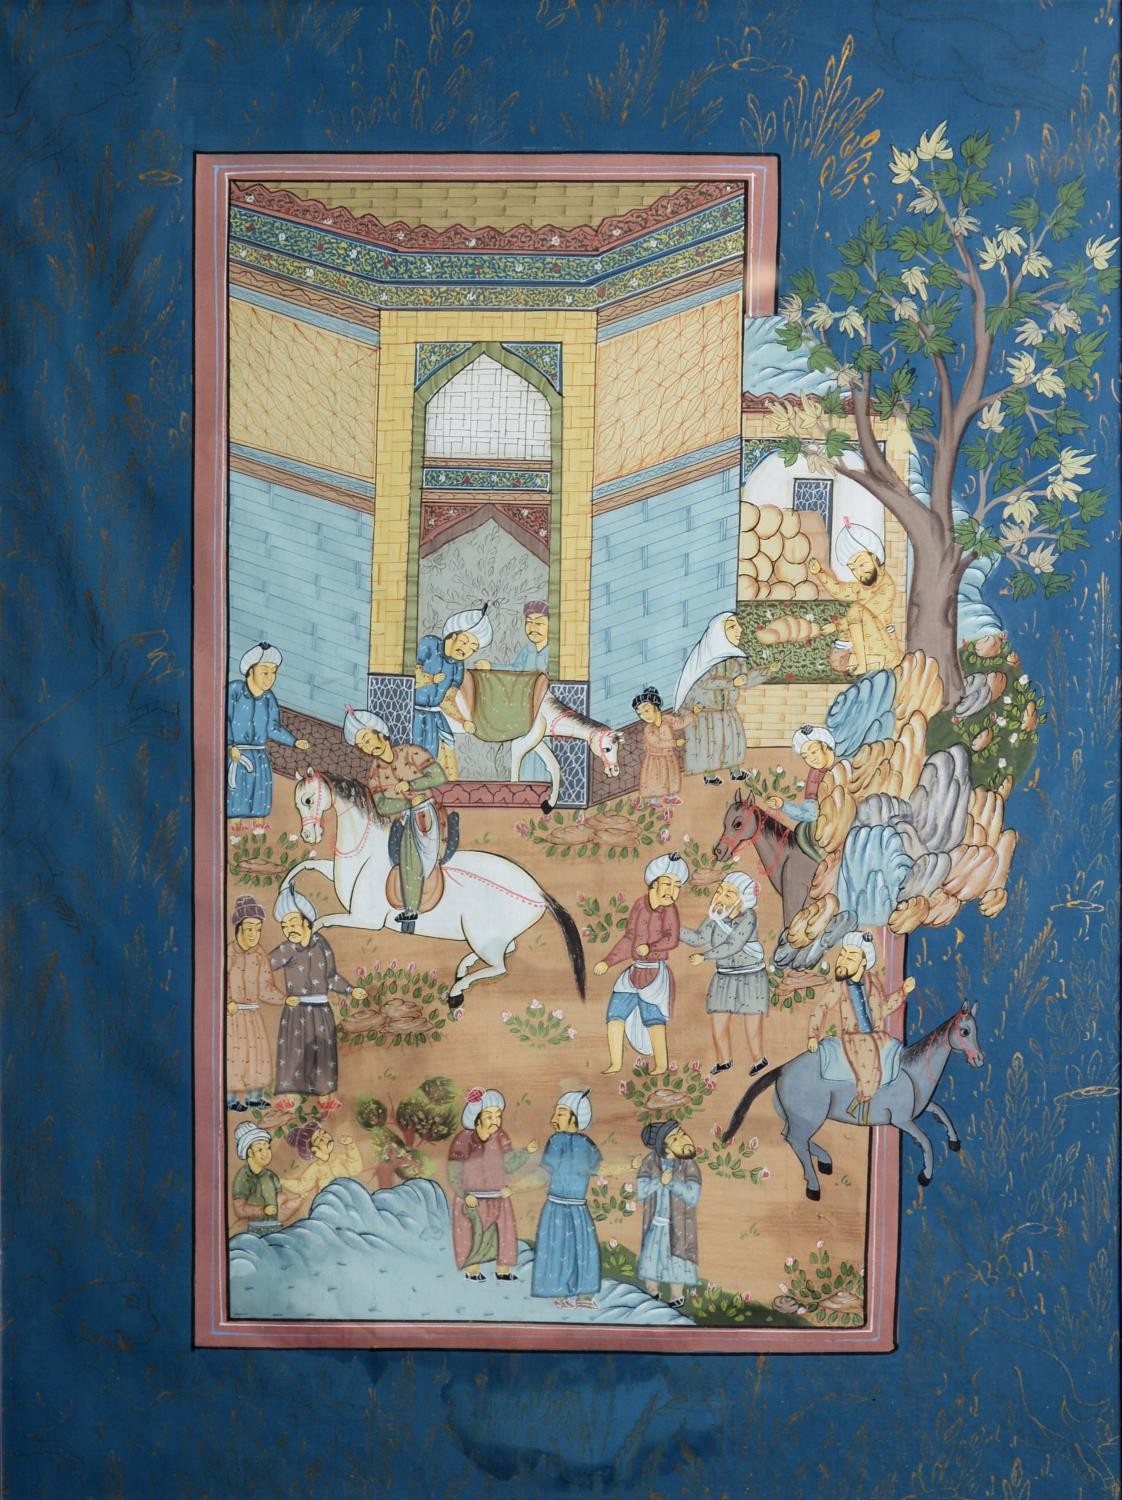 UNATTRIBUTED (TWENTIETH CENTURY PERSIAN SCHOOL) TWO GOUACHE DRAWINGS Court scene with figures